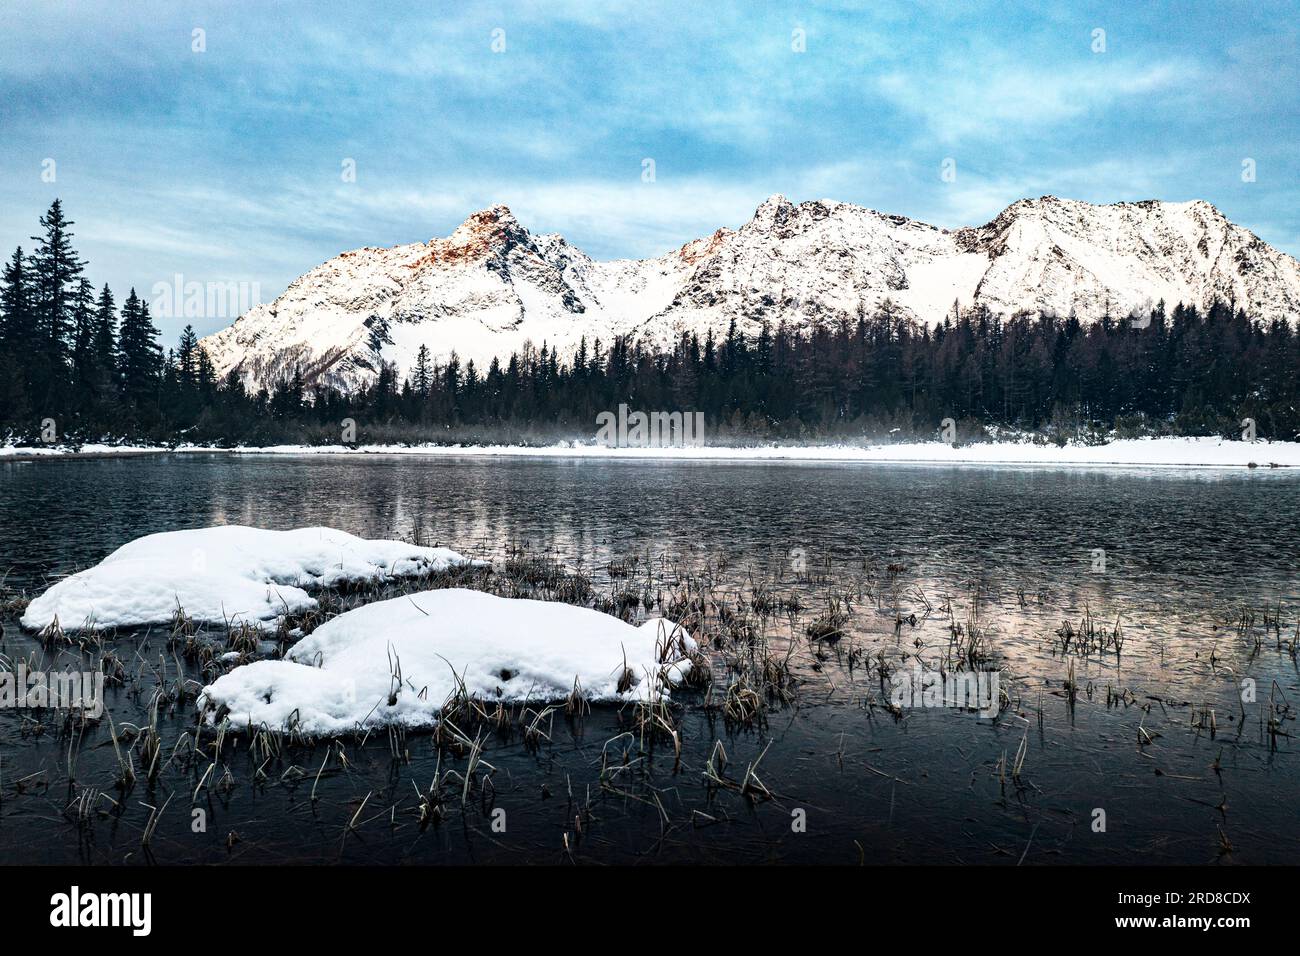 Snowy forest and mountains surrounding the frozen lake Entova, Valmalenco, Valtellina, Lombardy, Italy, Europe Stock Photo